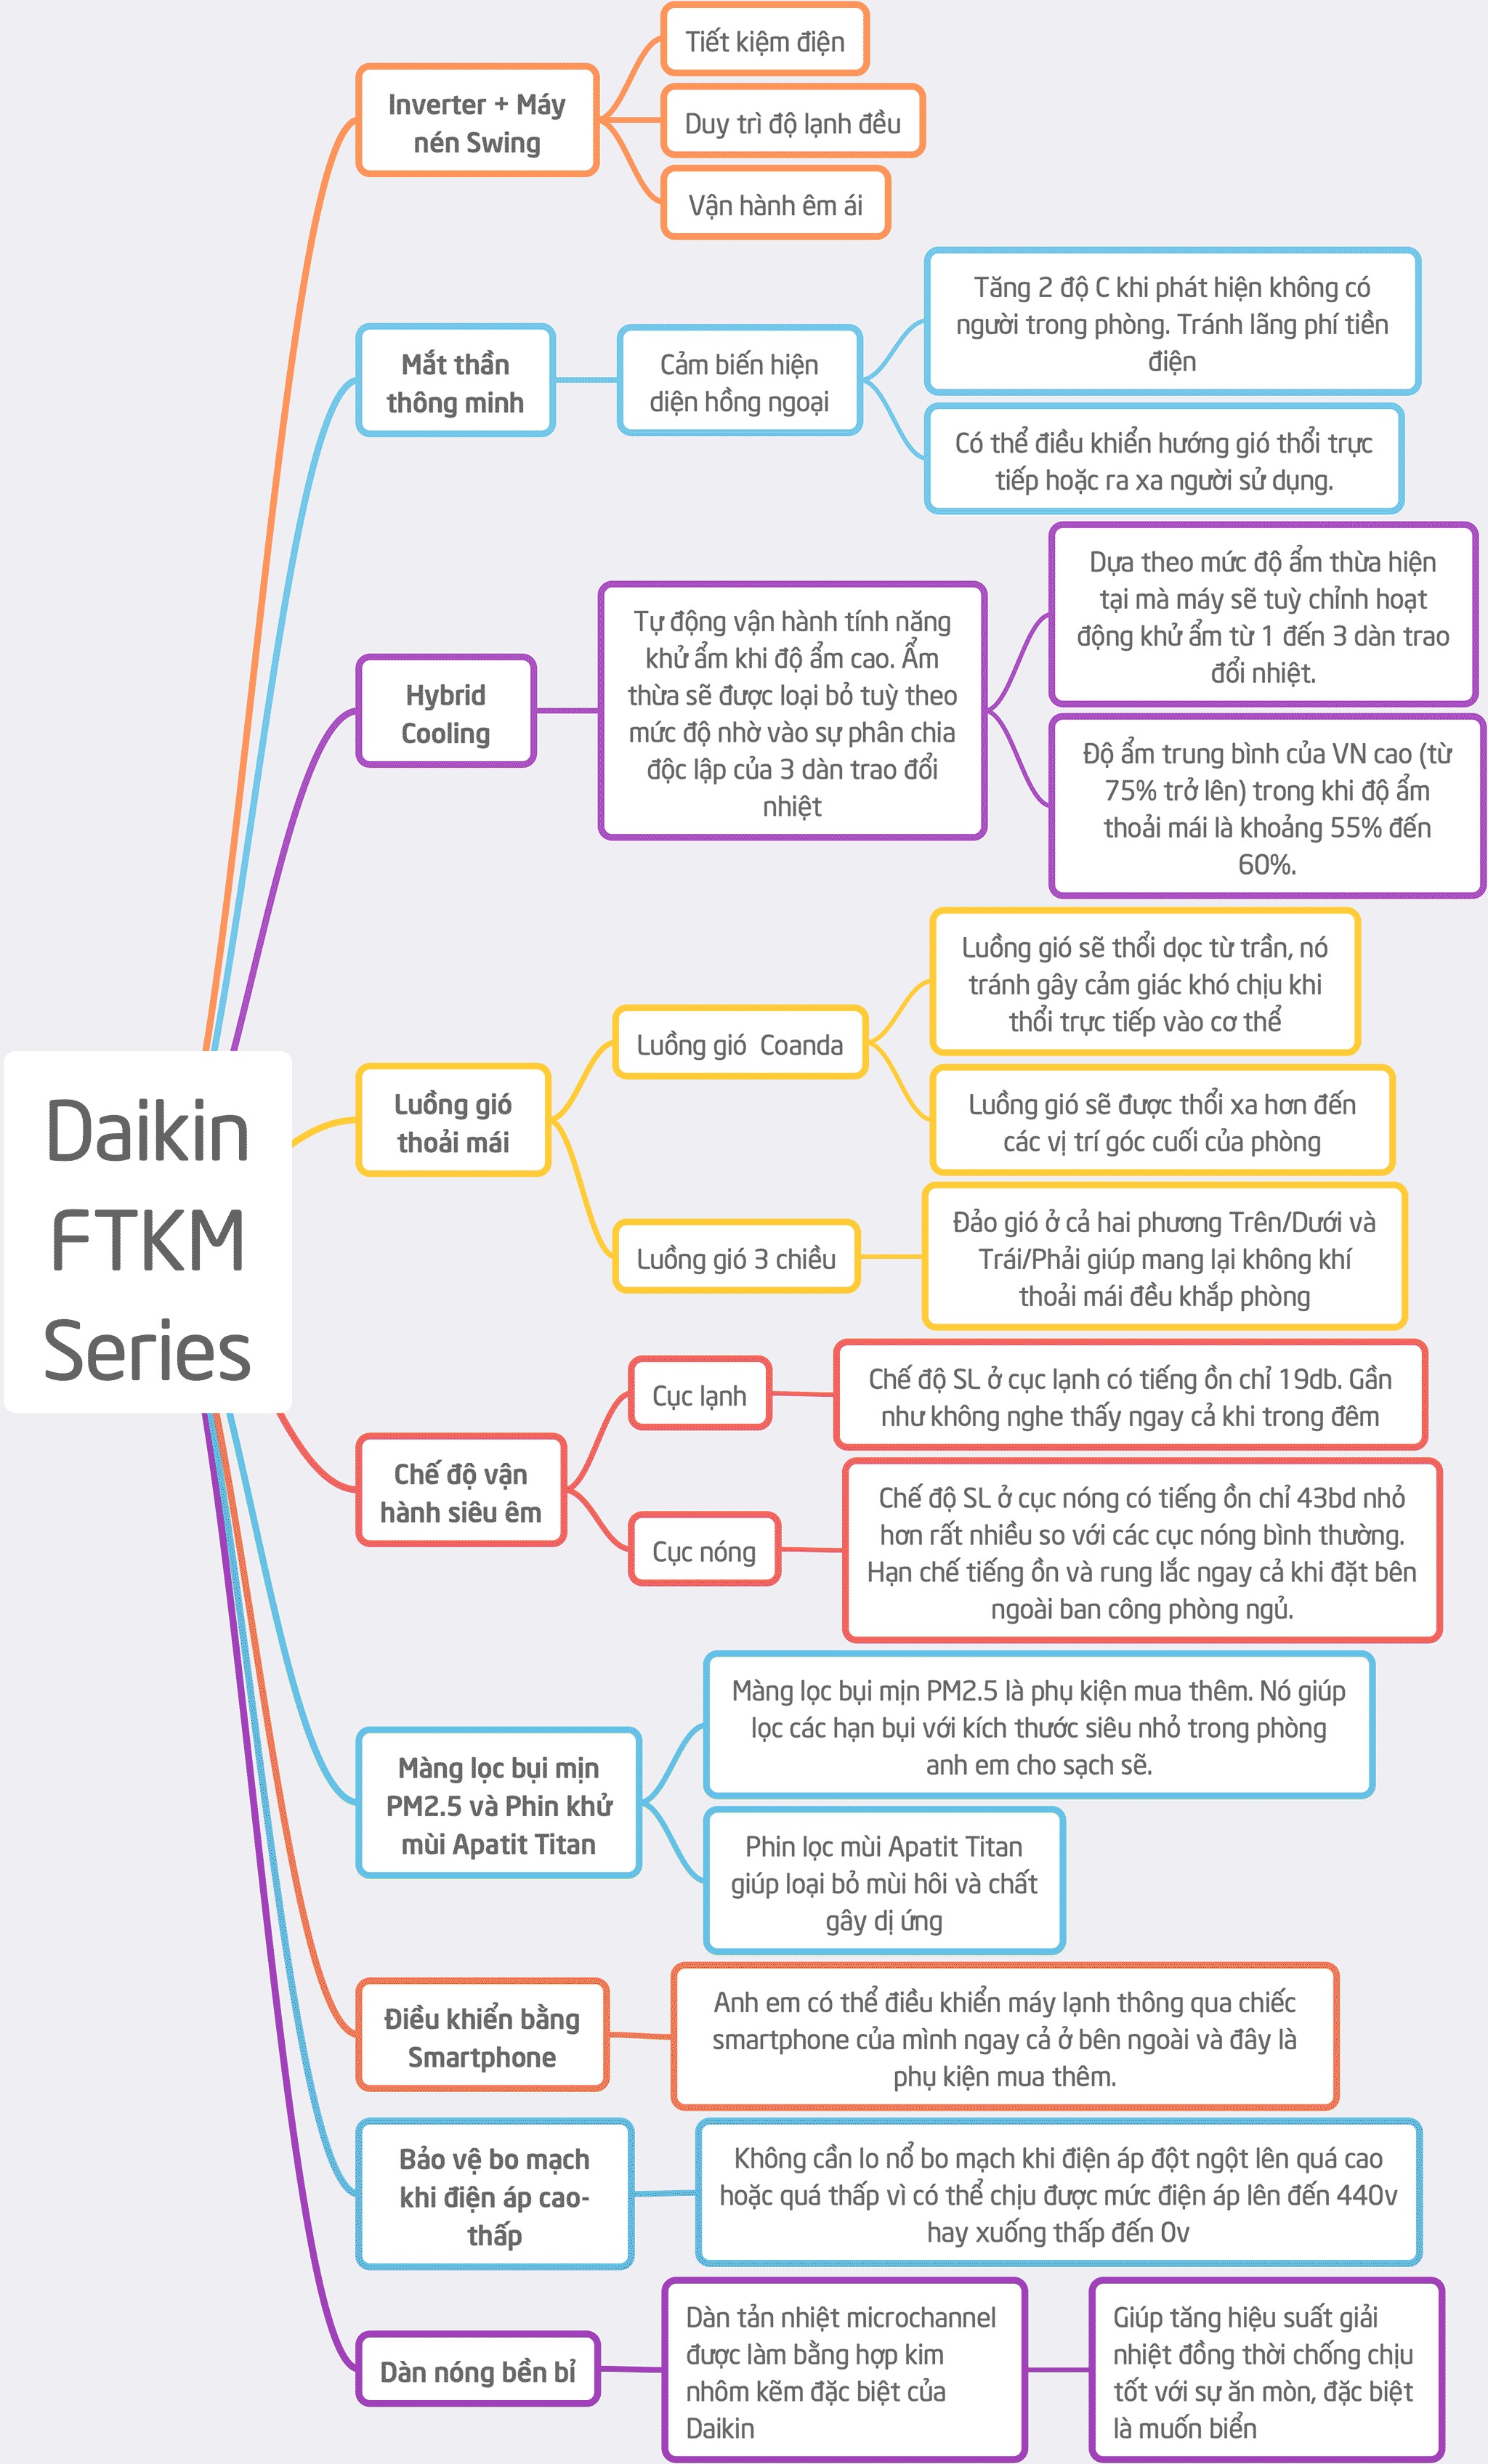 Đang tải Daikin-FTKM-Series.gif…